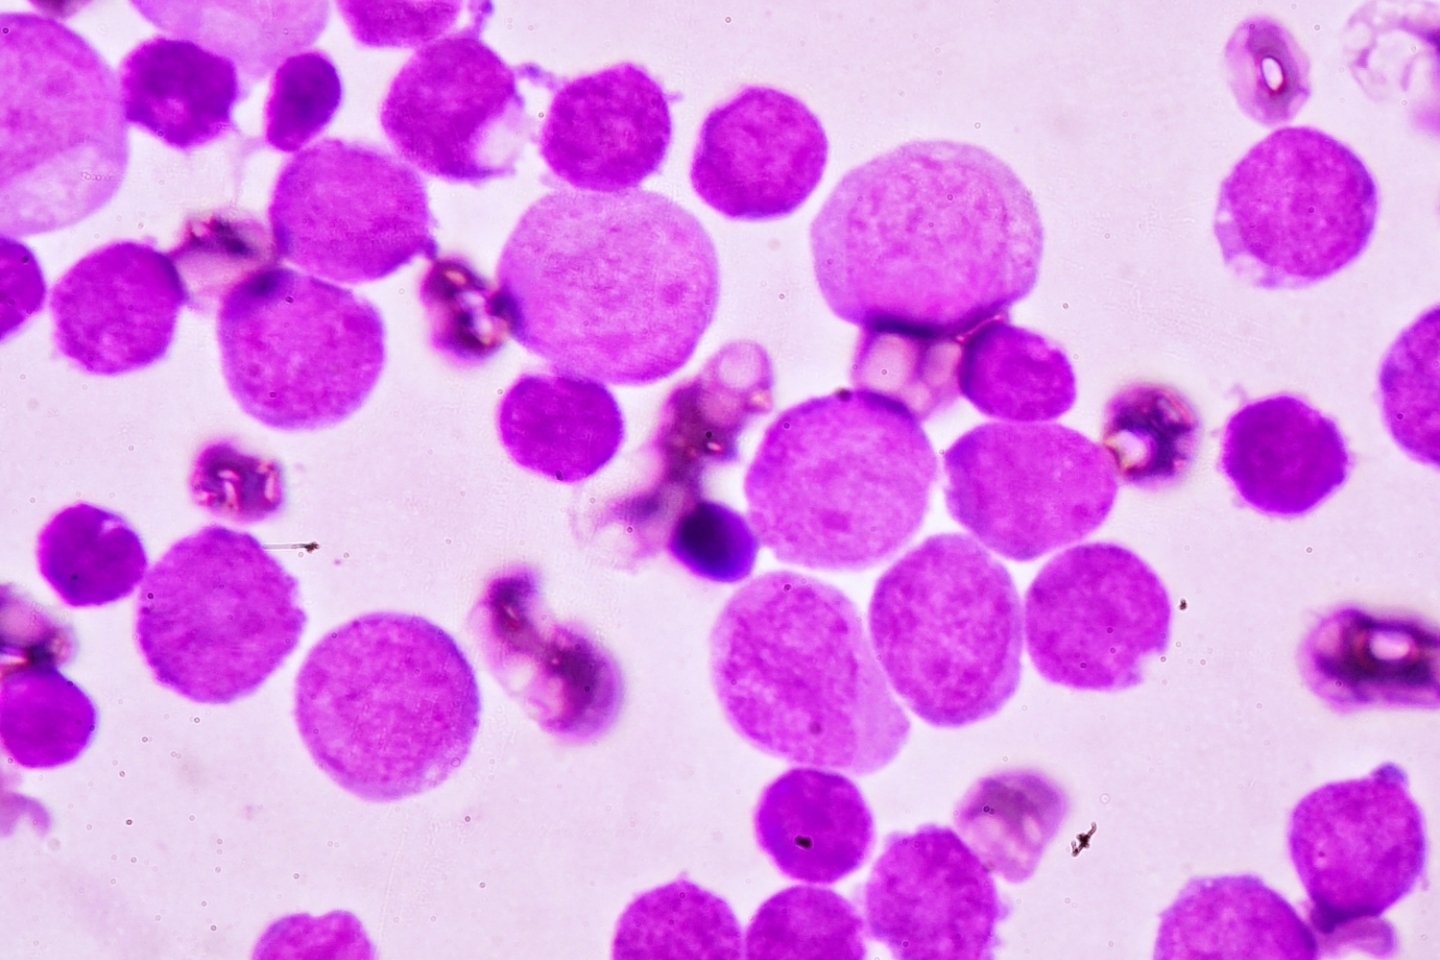 Blood smear under microscopy showing adult acute myeloid leukemia.